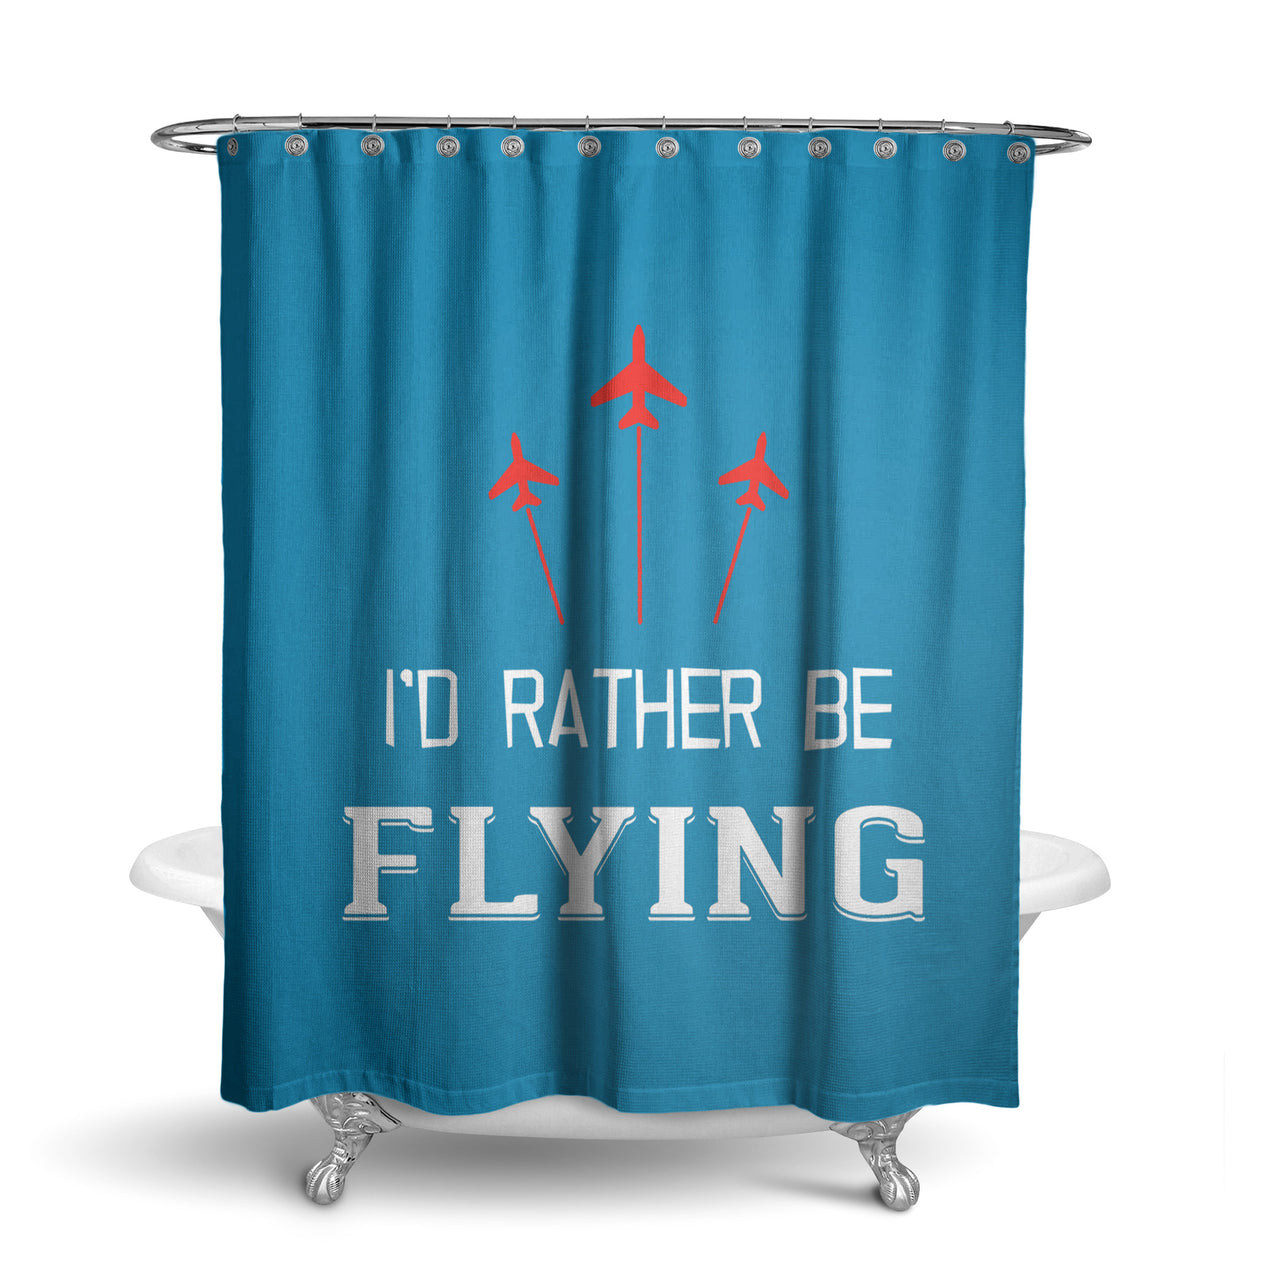 I'D Rather Be Flying Designed Shower Curtains